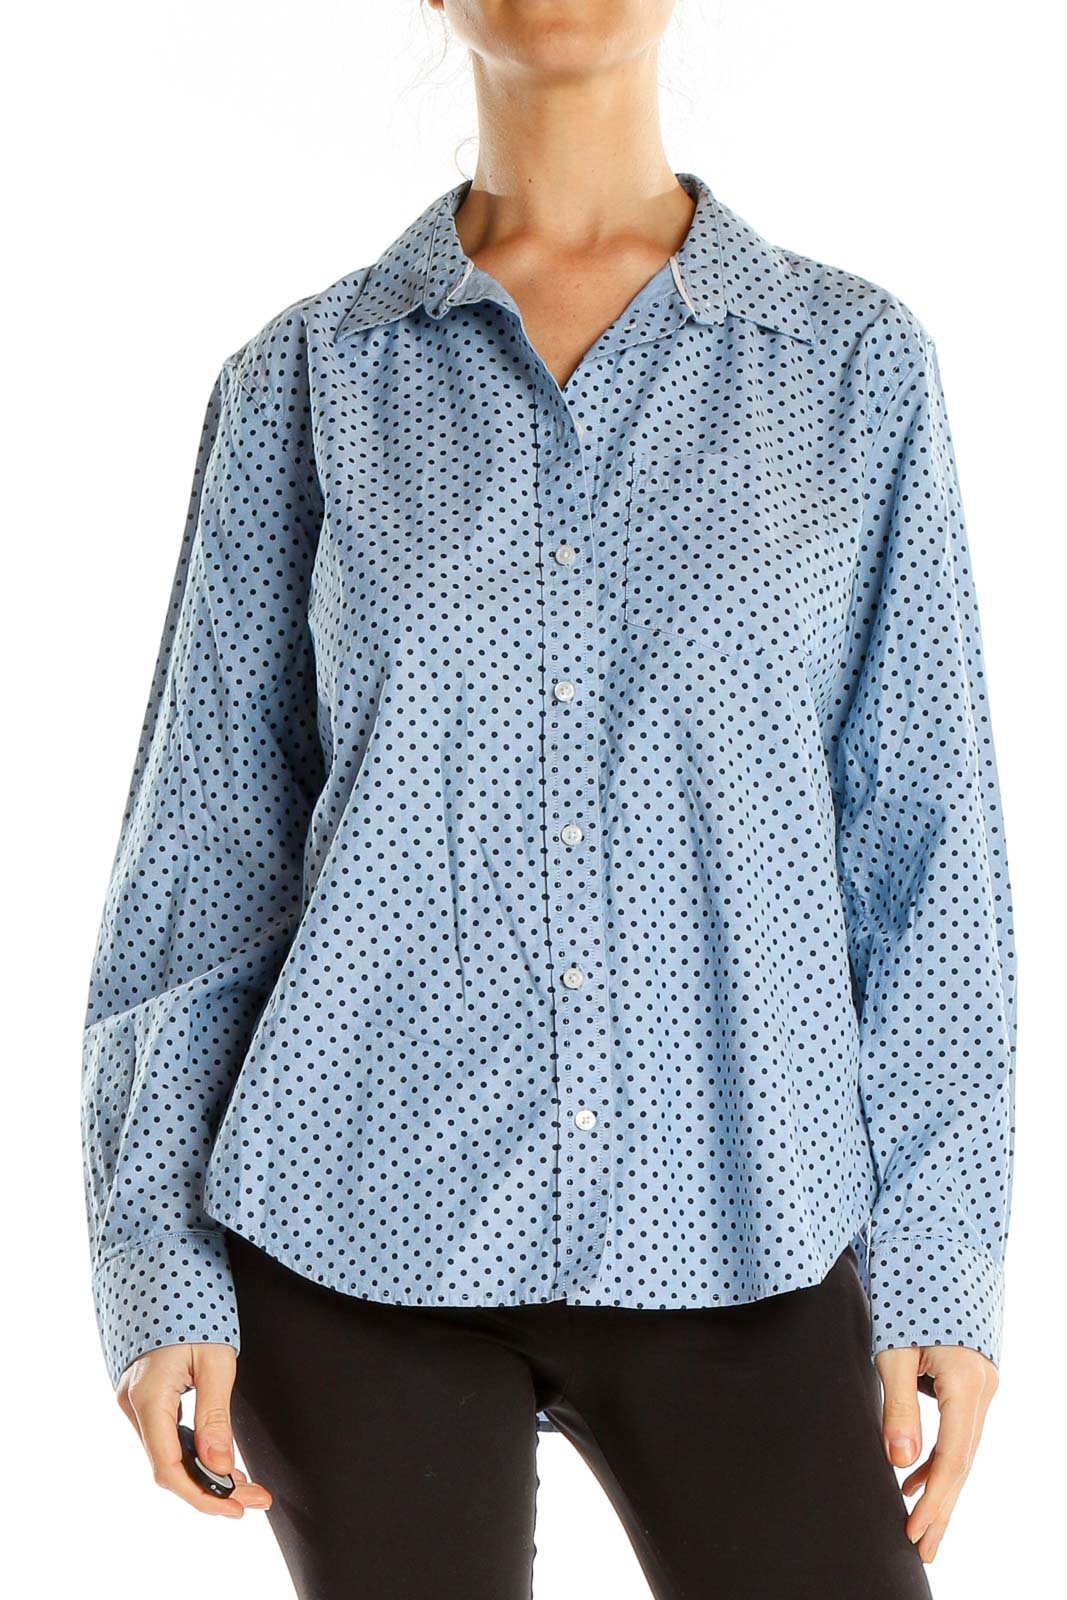 Blue Polka Dot Formal Shirt Front